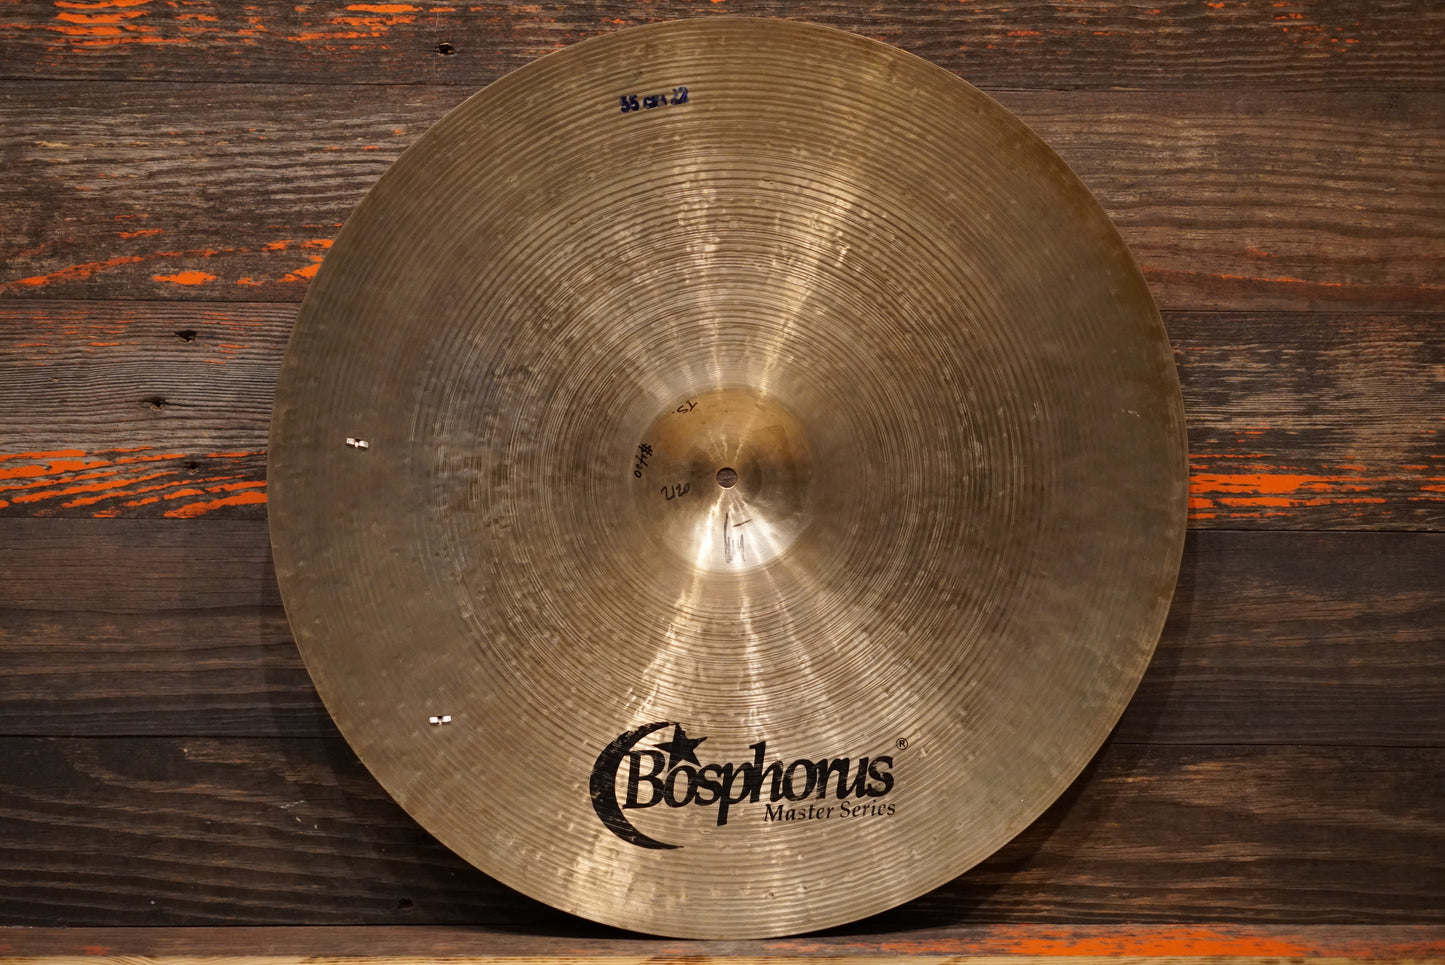 Bosphorus 22" Masters Ride Cymbal - 2120g